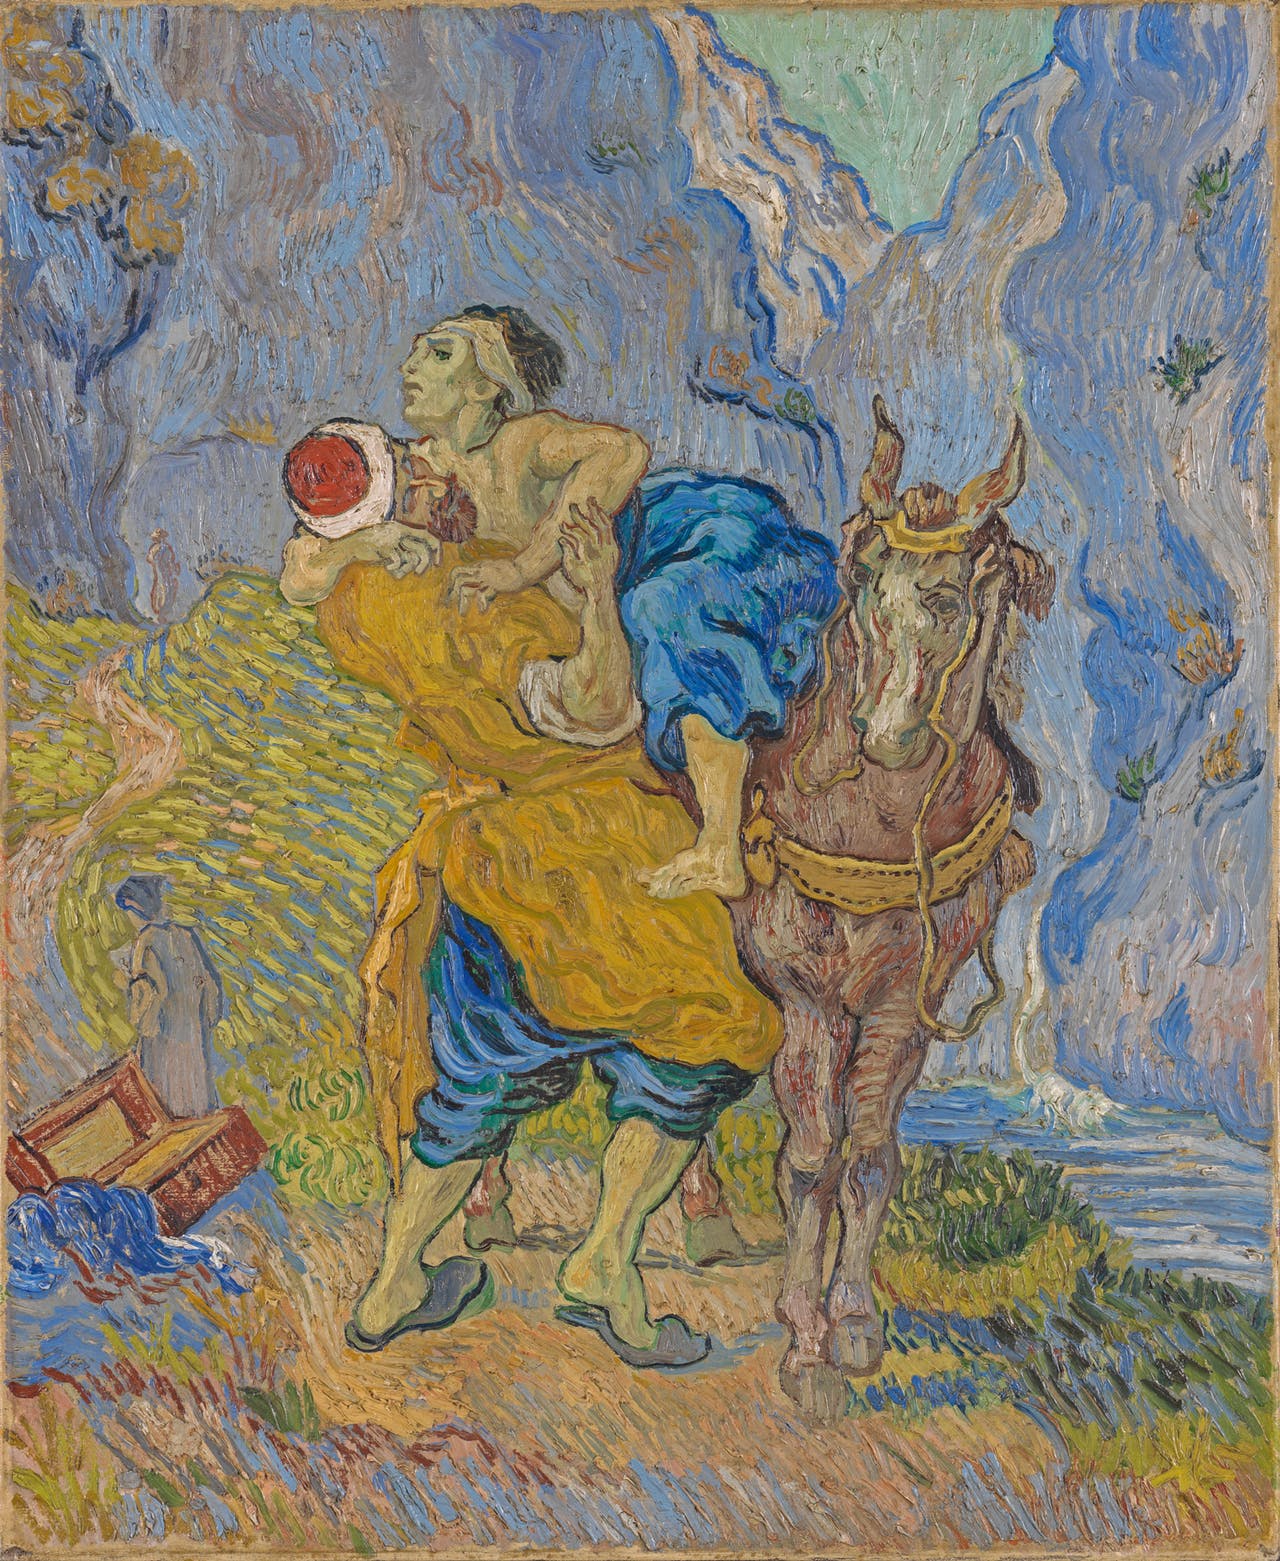 Der gute Samariter by Vincent van Gogh - Früher Mai 1890 - 73 × 59.5 cm Kröller-Müller Museum